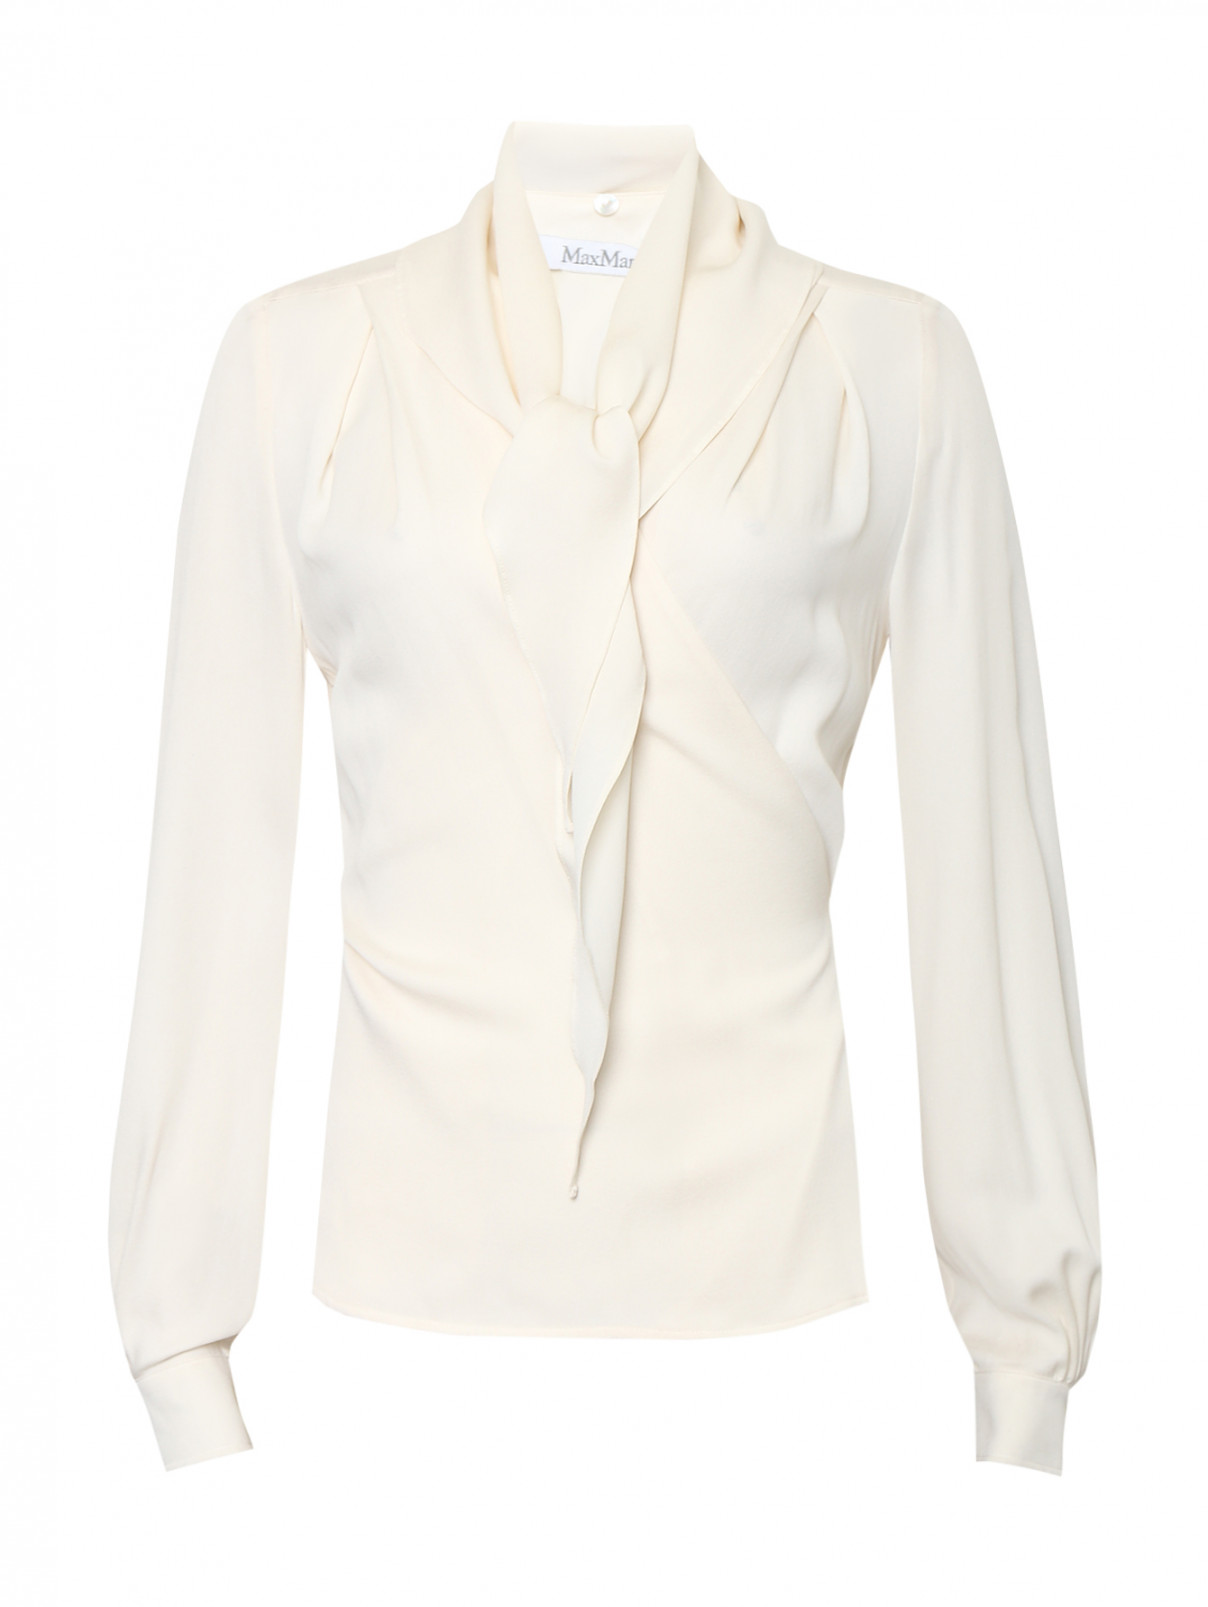 Блуза из шелка Max Mara  –  Общий вид  – Цвет:  Белый